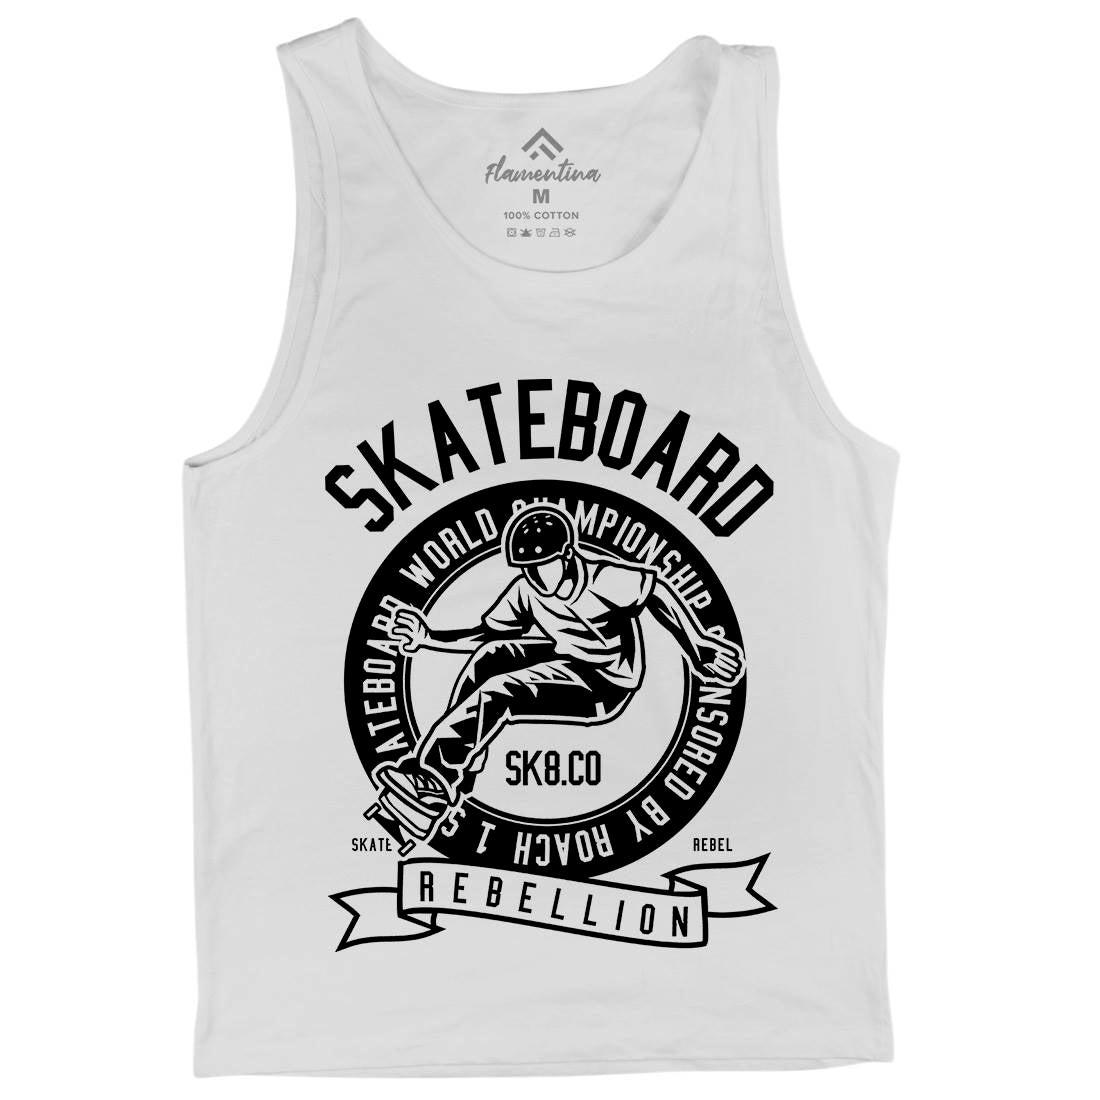 Skateboard Rebellion Mens Tank Top Vest Skate B624